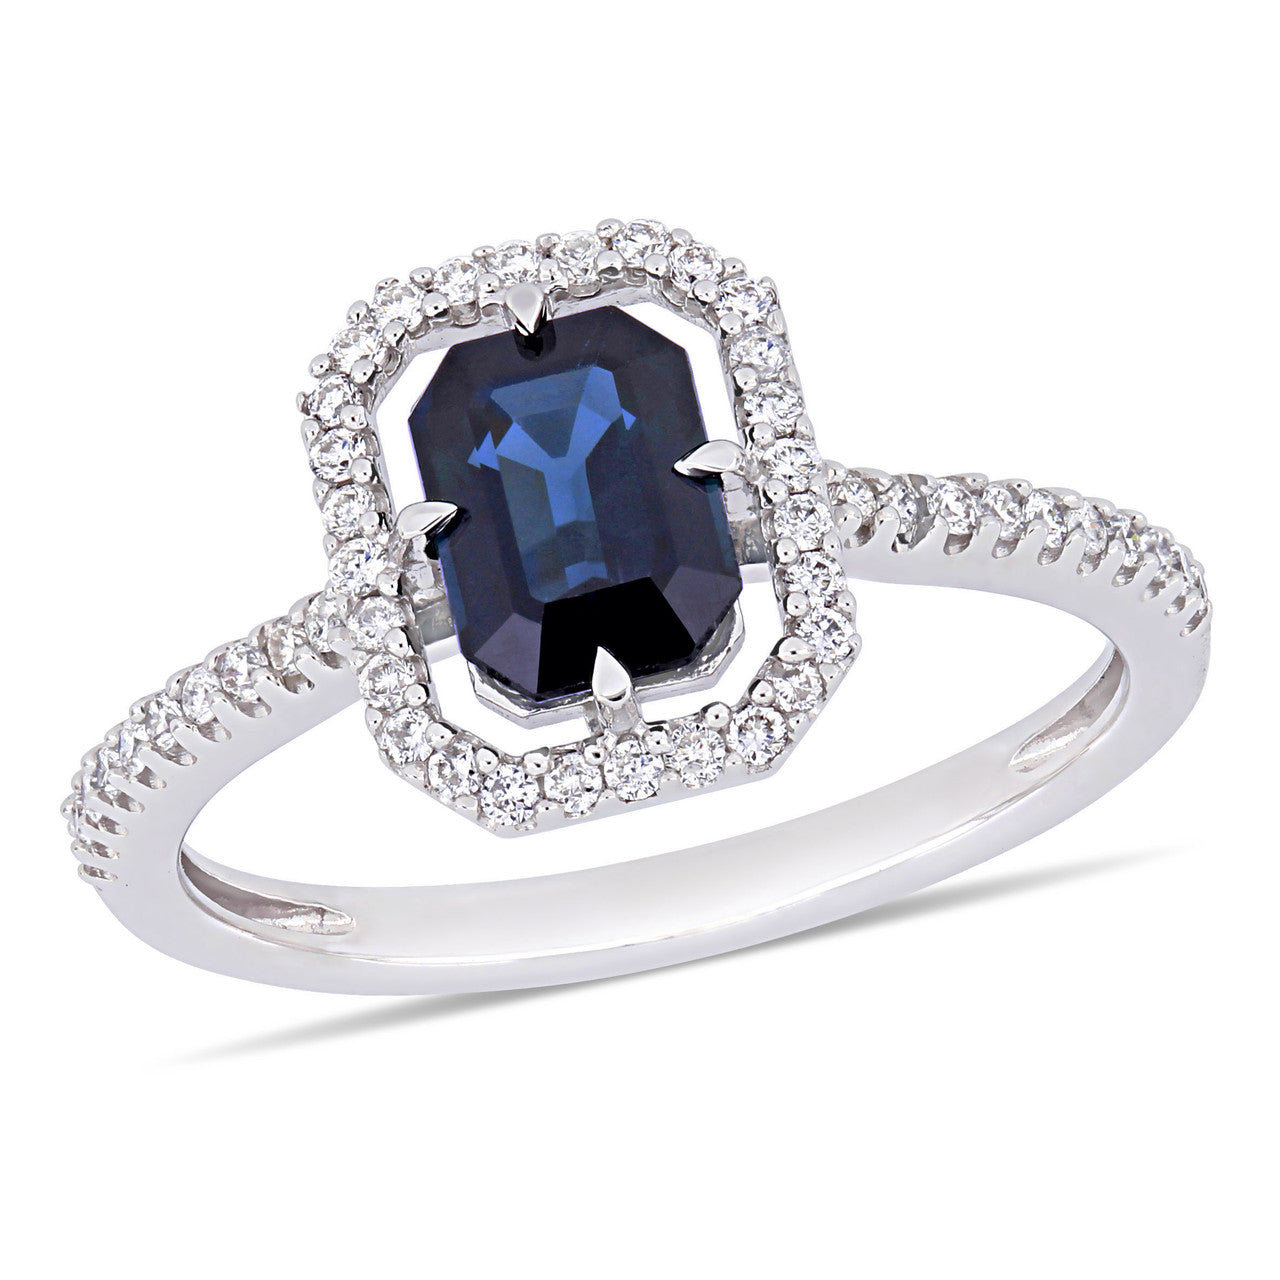 Ice Jewellery 1/4 CT Diamond TW & 1 1/6 CT TGW Blue Sapphire - CN Fashion Ring 14k White Gold GH I1 - 75000004598 | Ice Jewellery Australia